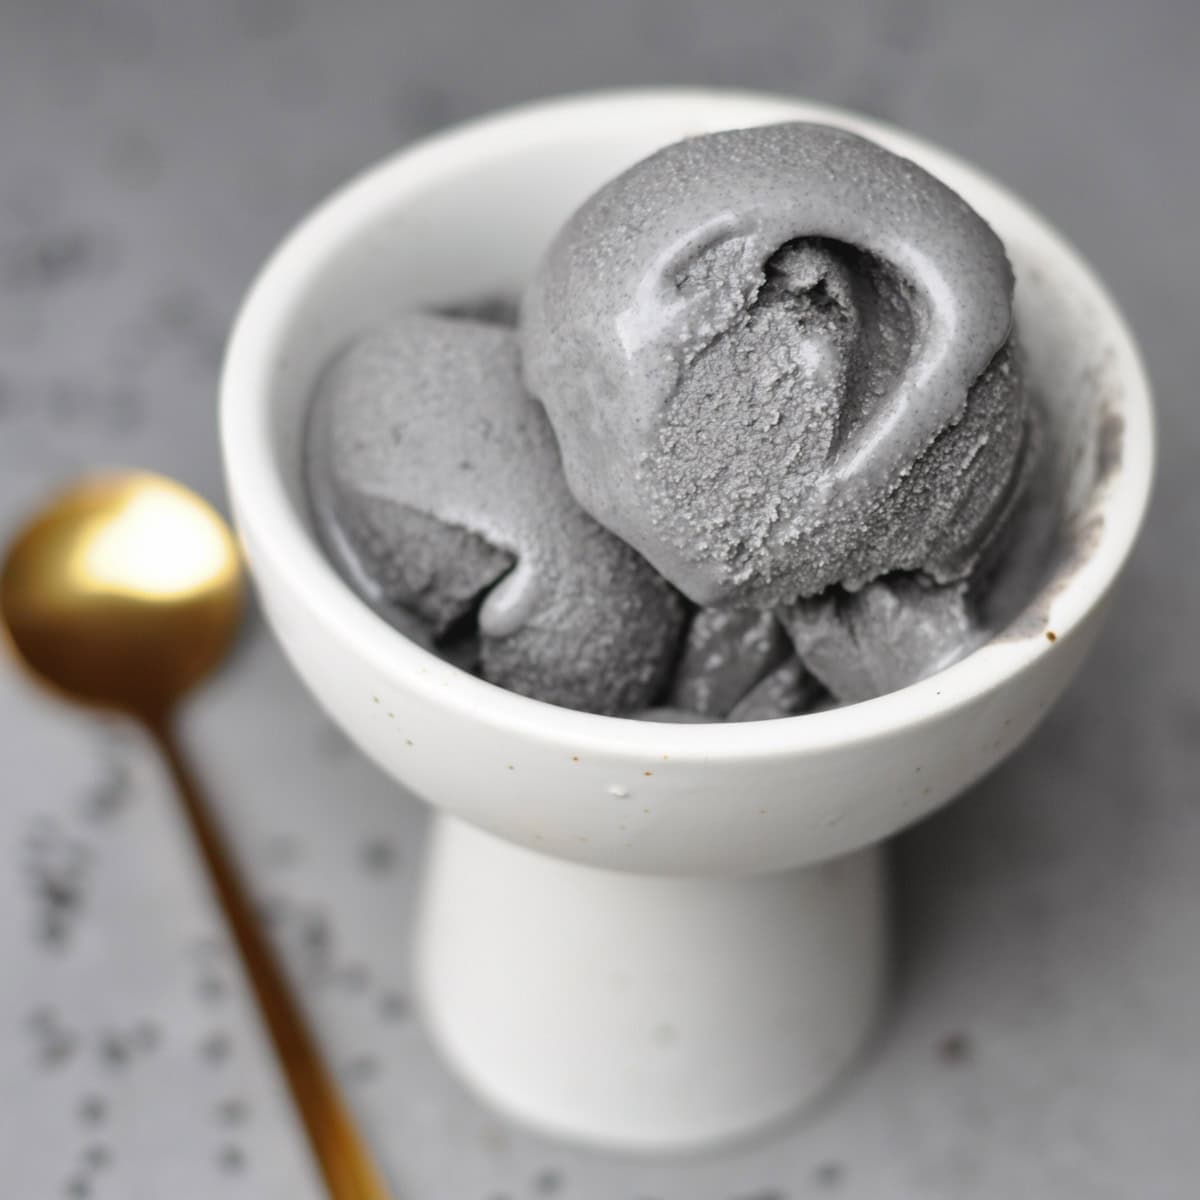 black sesame ice cream in a white bowl